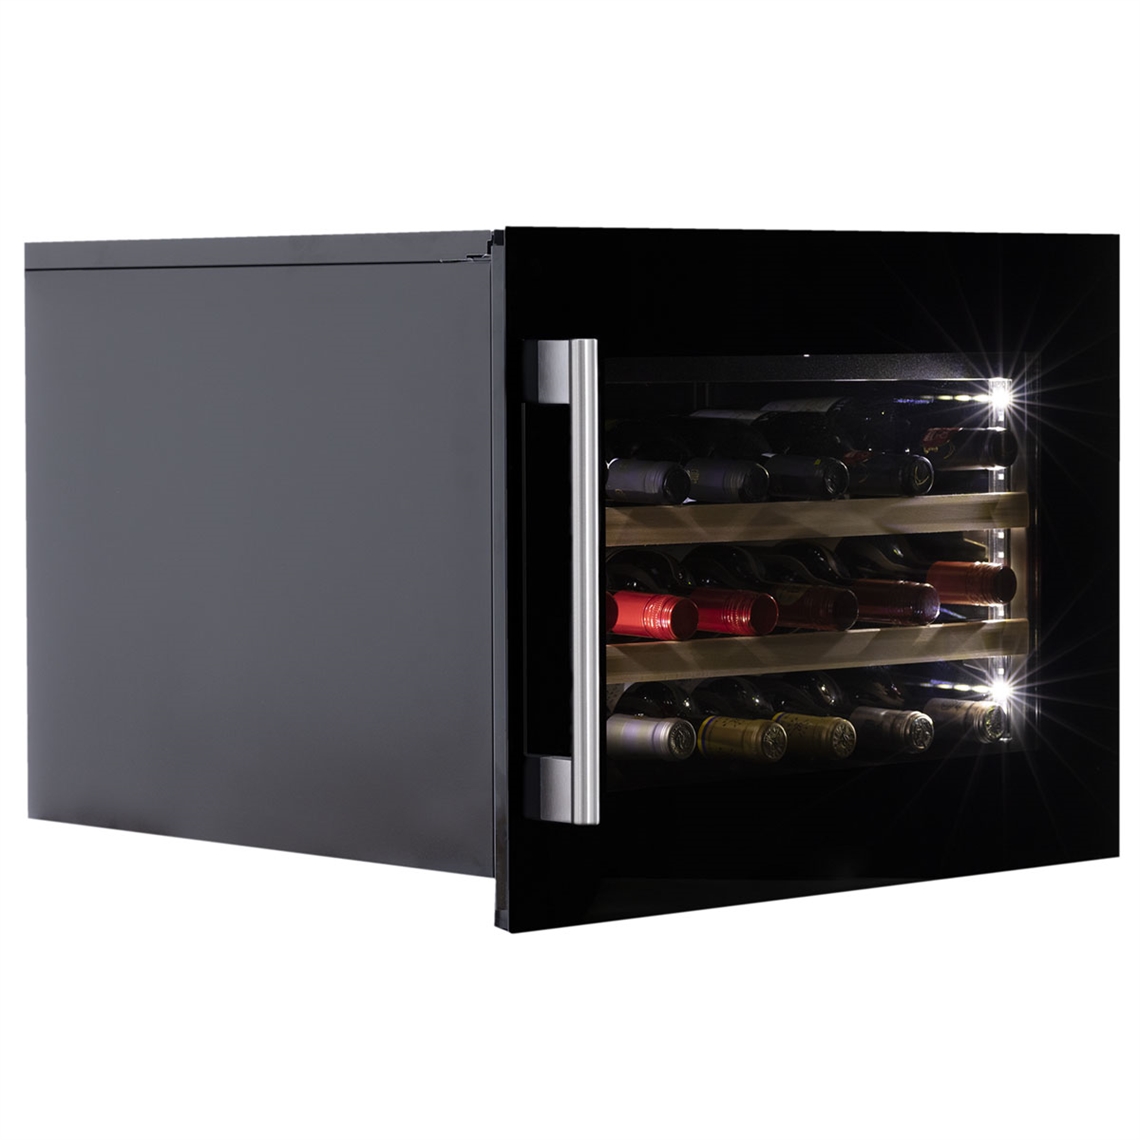 Dunavox Wine Cabinet Soul - Single Temperature Slot-In - Black DAVS-18.46B